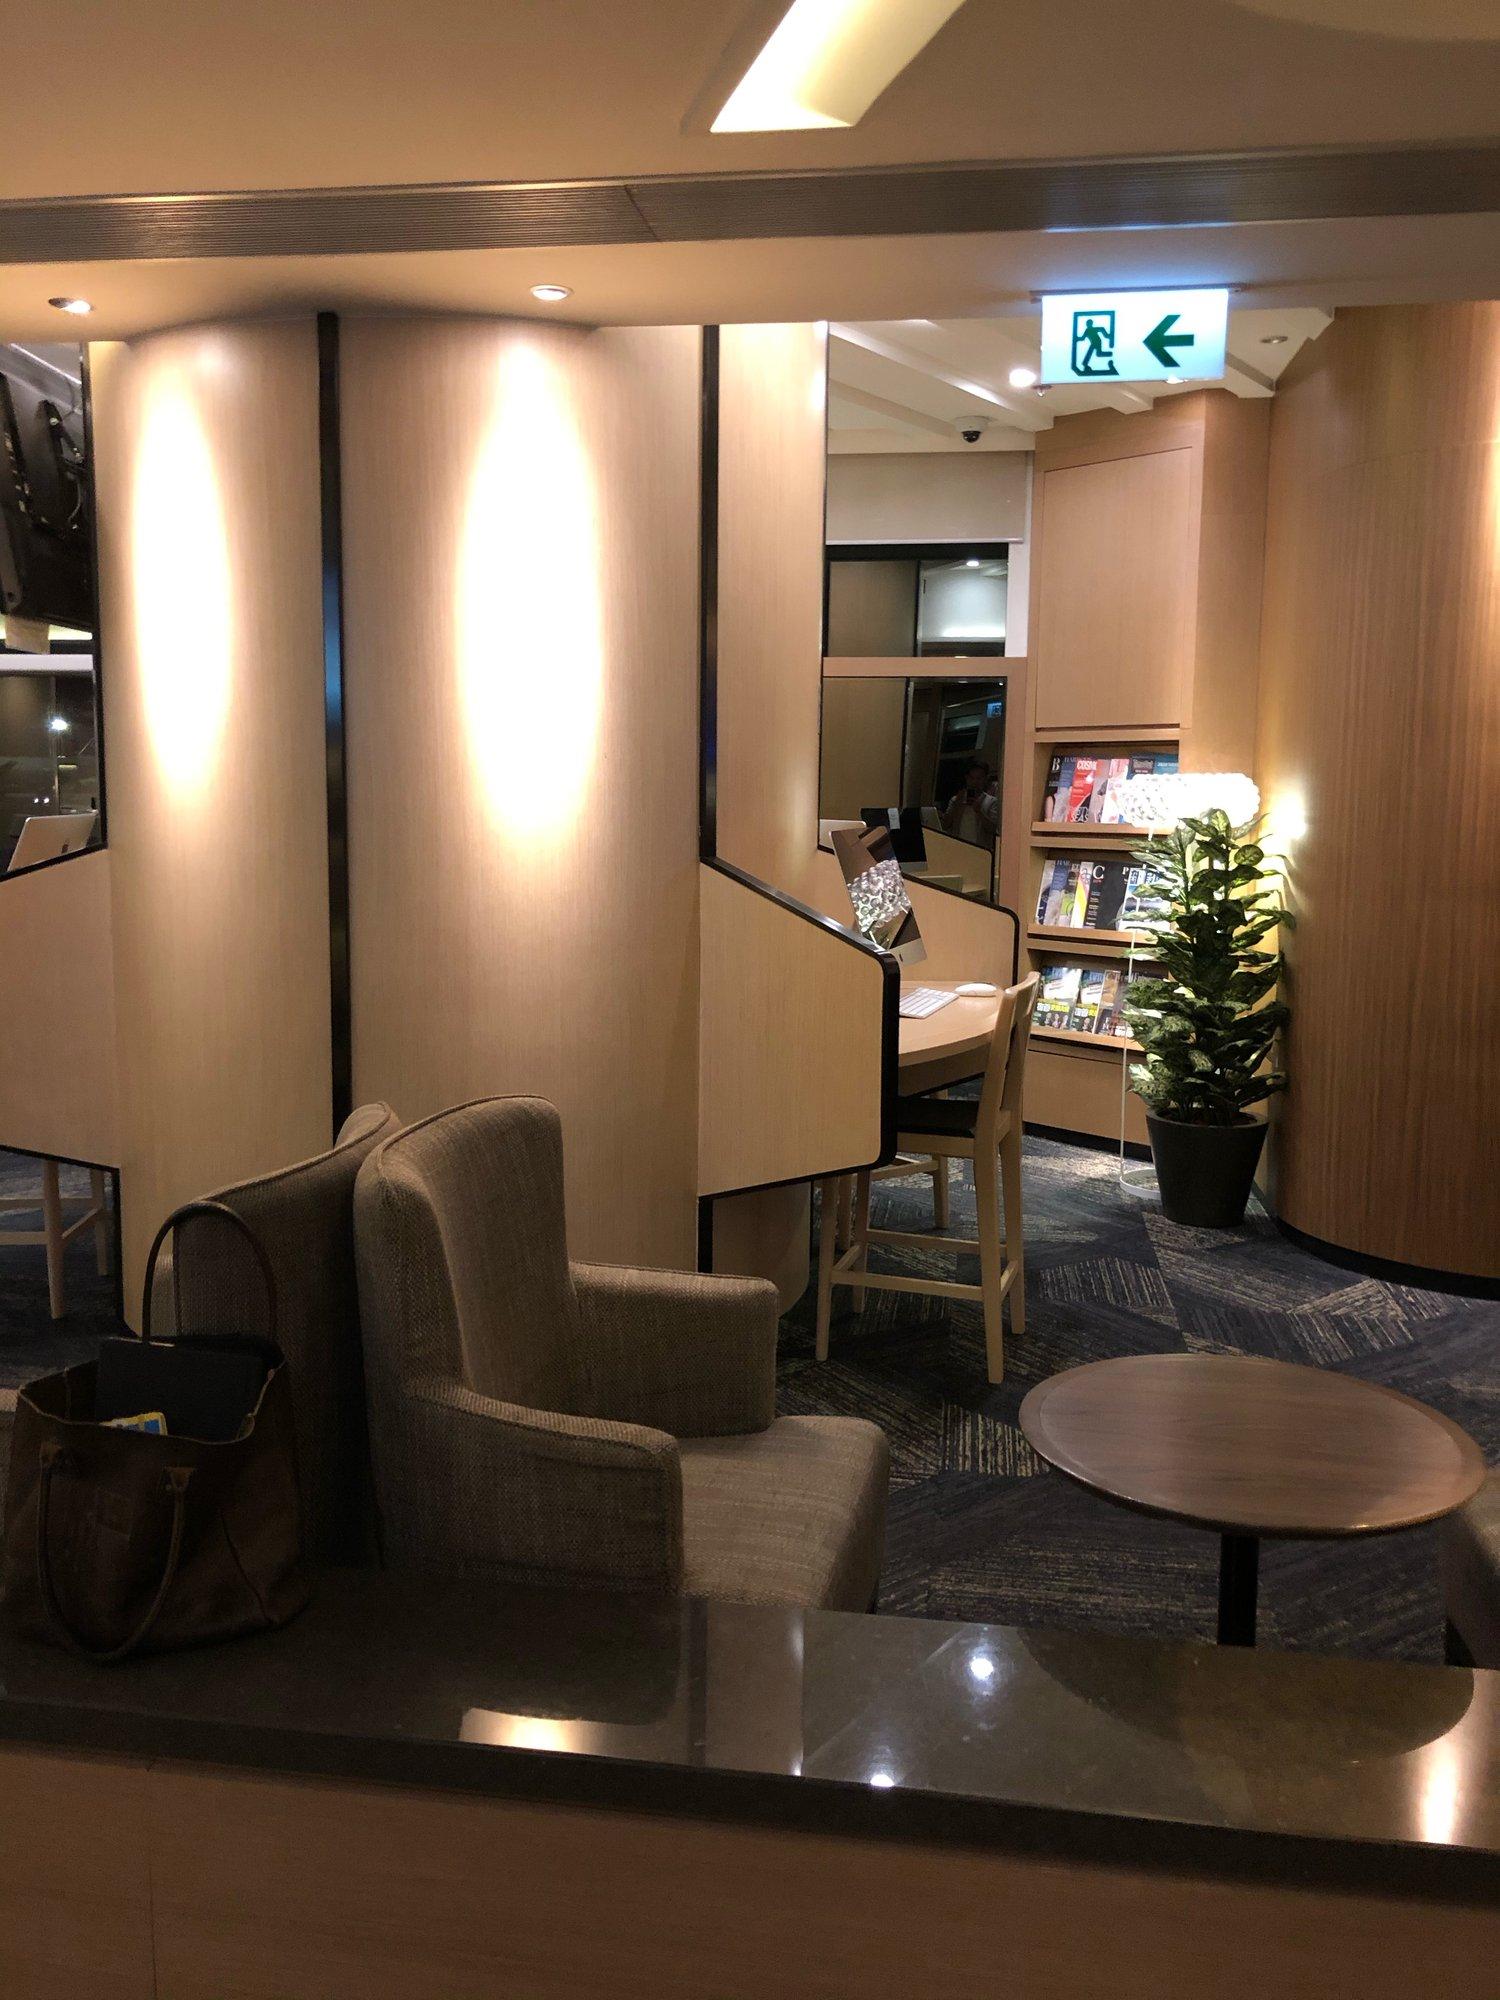 Hong Kong Airlines VIP Lounge (Club Bauhinia) image 39 of 40